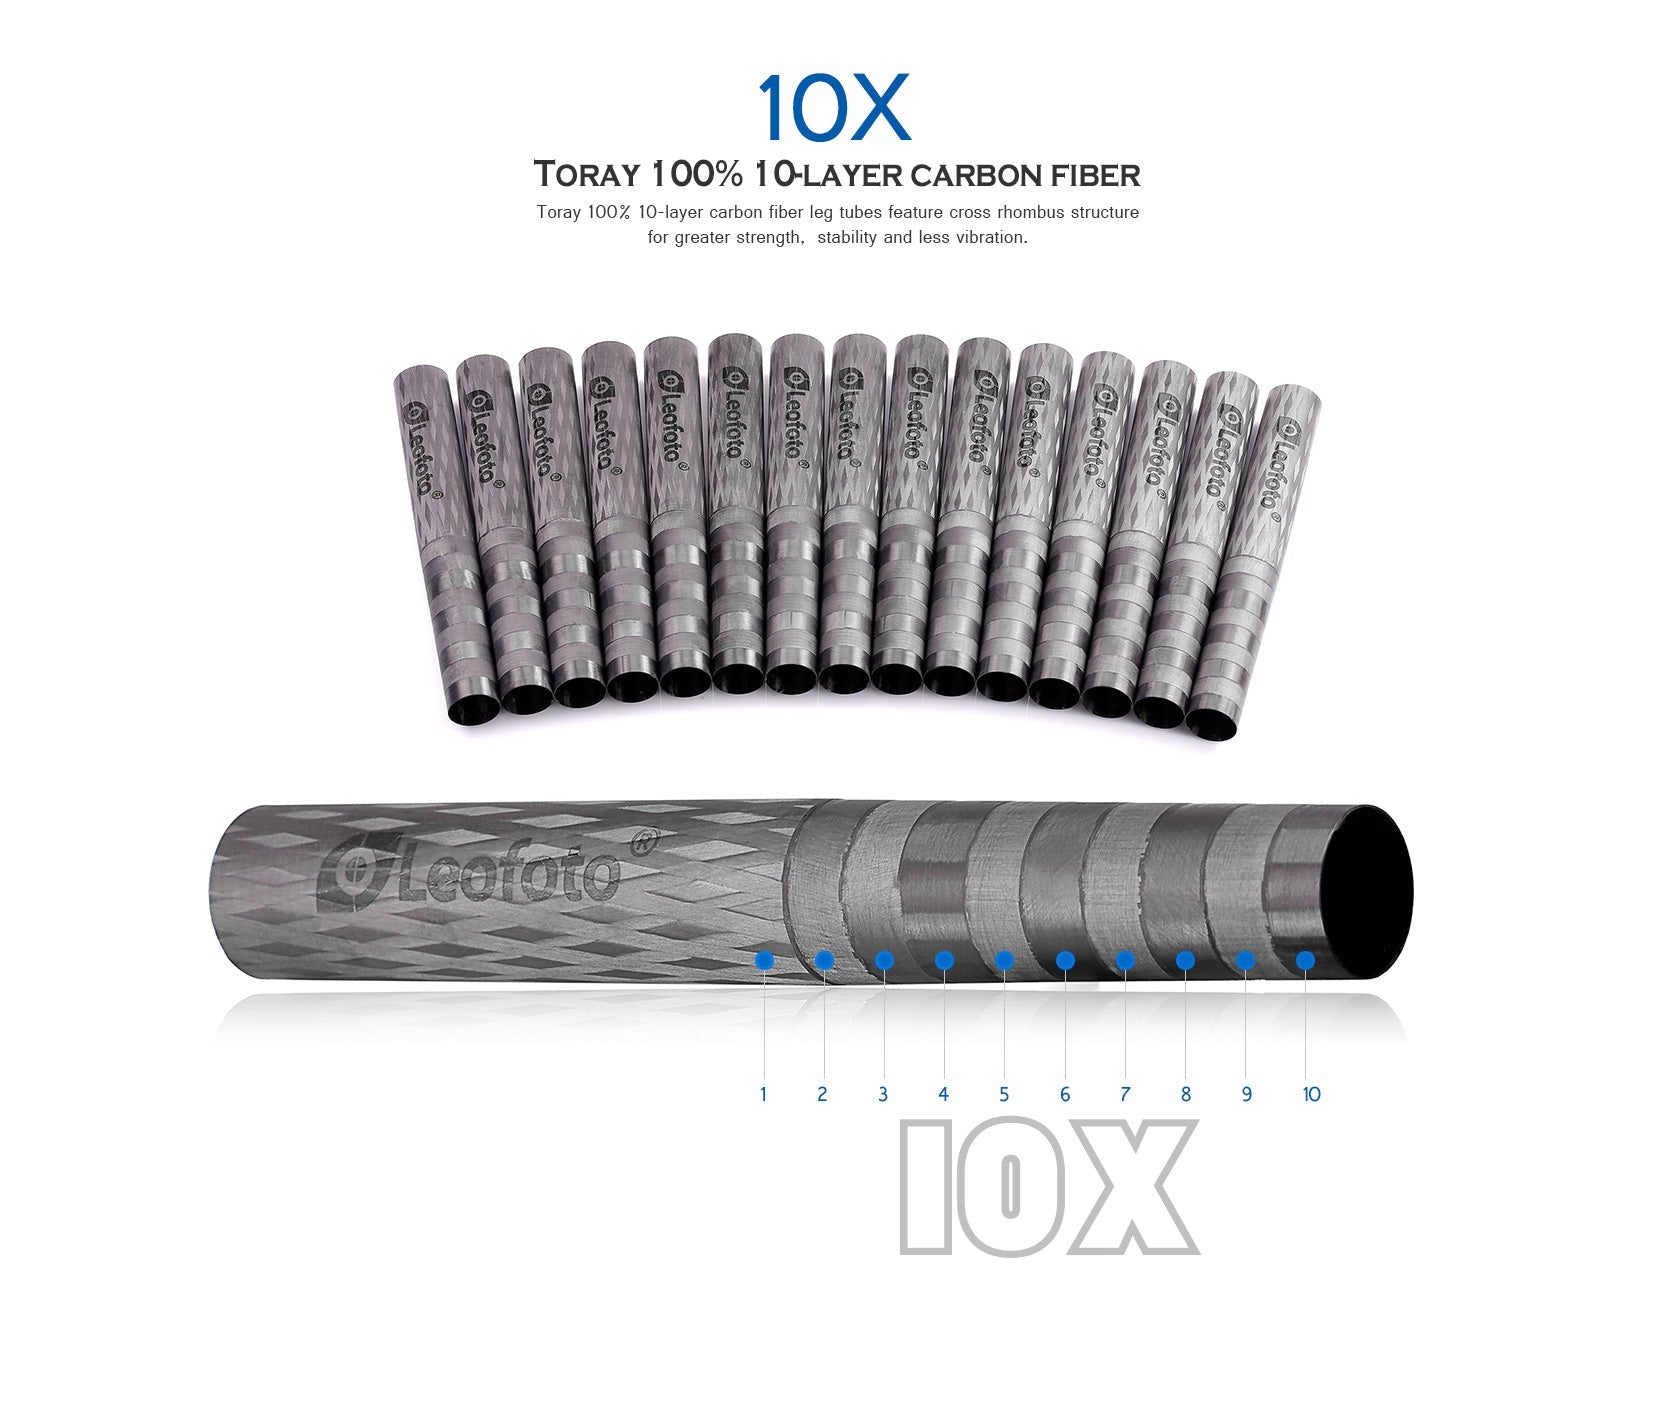 “Open Box" Leofoto LS-325C+LH-40 Professional Light Weight Carbon Fiber Tripod with BallheadKit